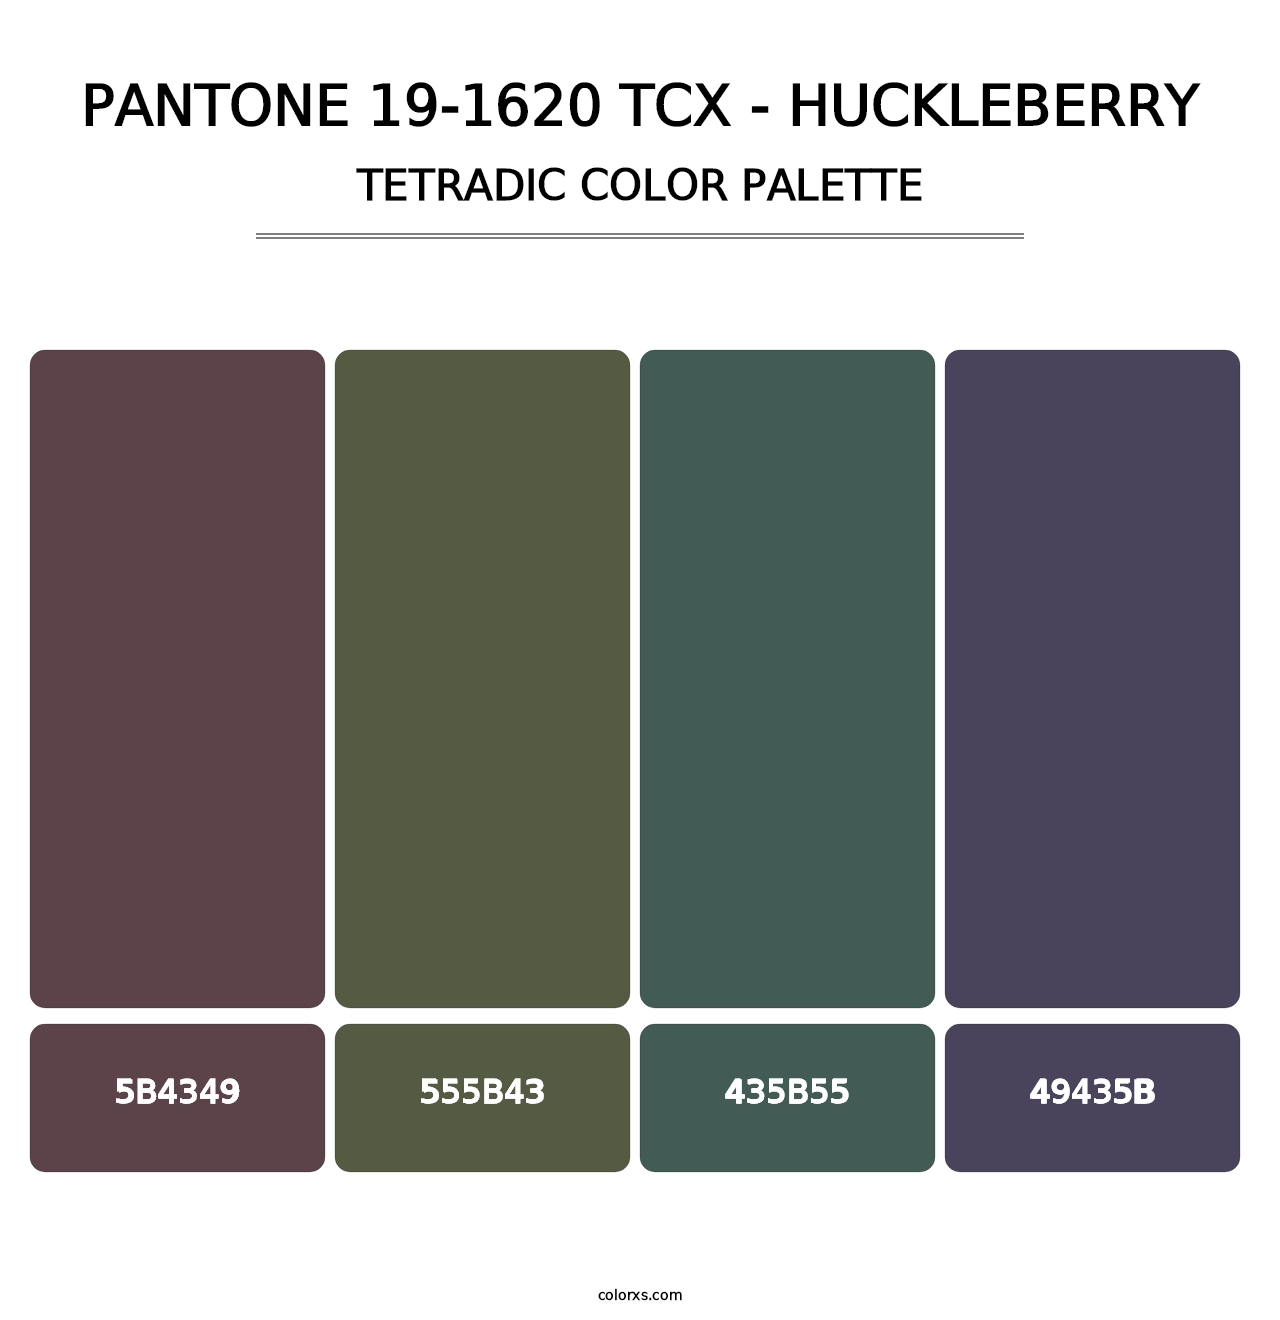 PANTONE 19-1620 TCX - Huckleberry - Tetradic Color Palette